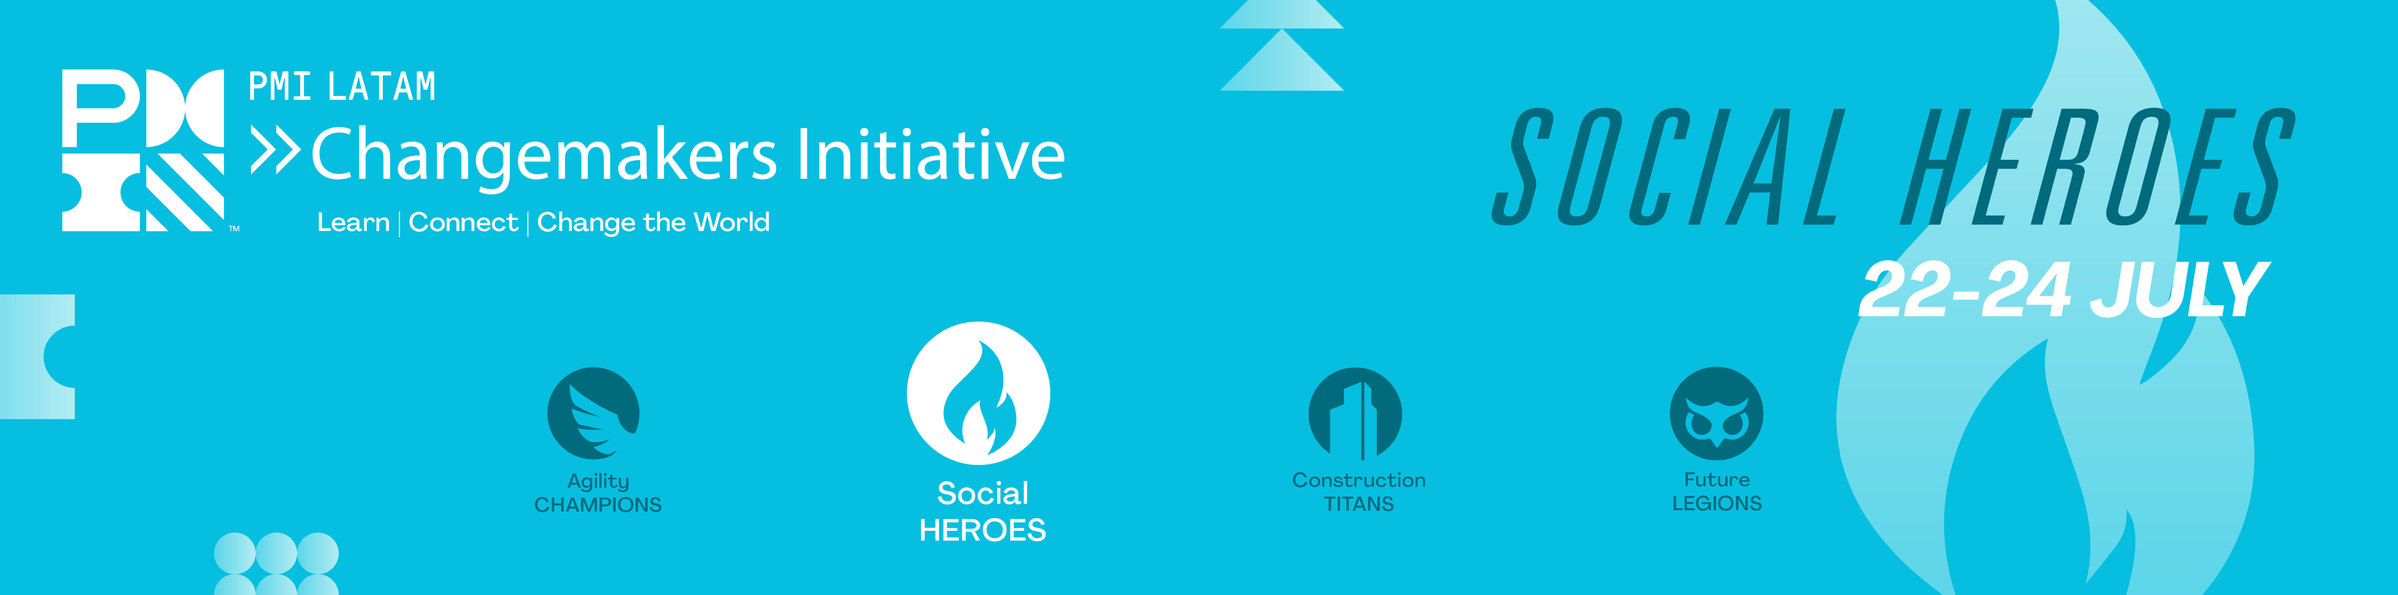 PMI LATAM Changemakers Initiative: Social Heroes